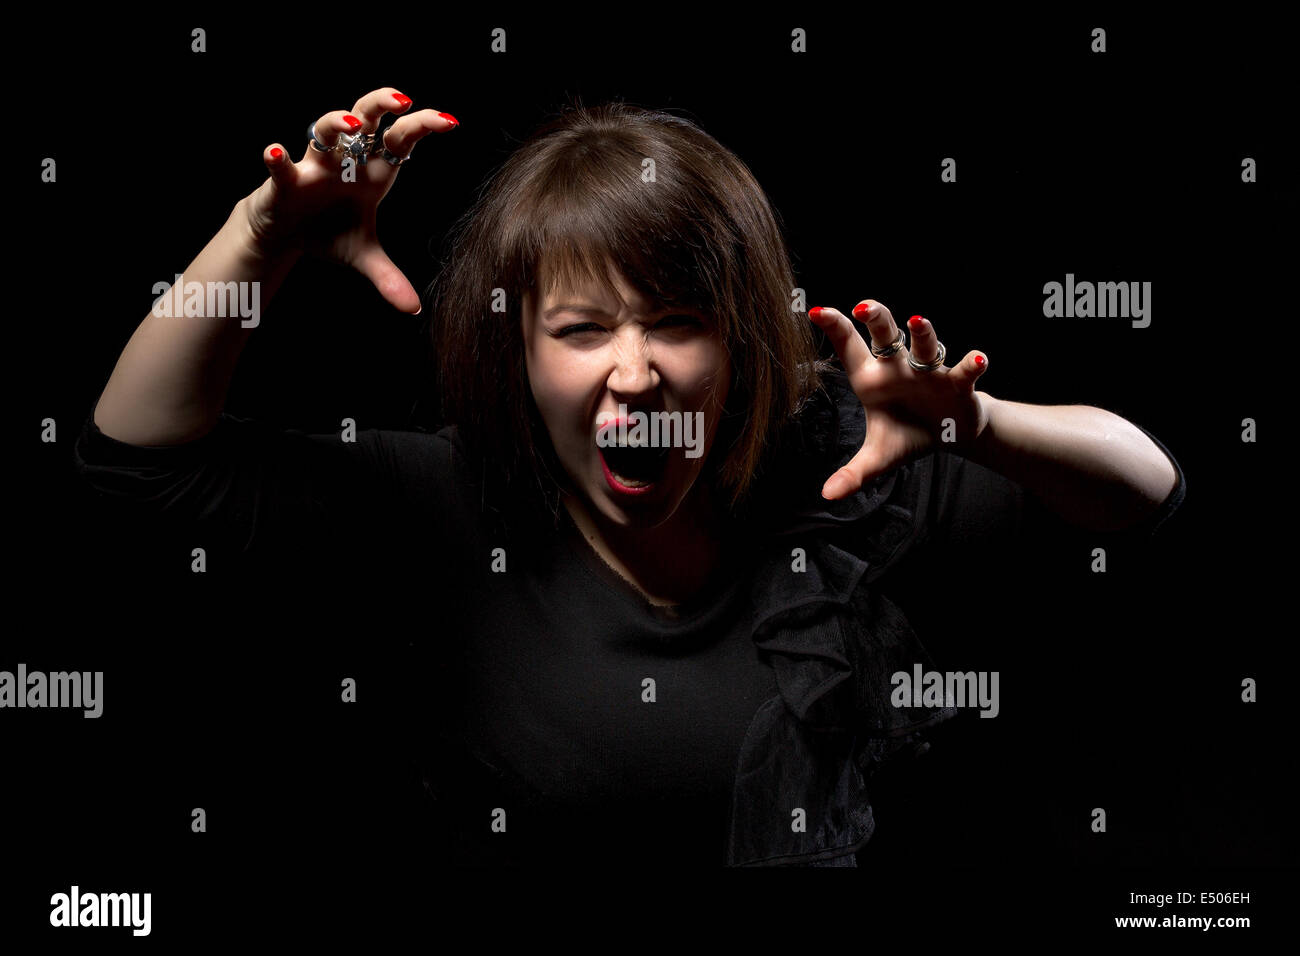 Woman throwing a temper tantrum Stock Photo